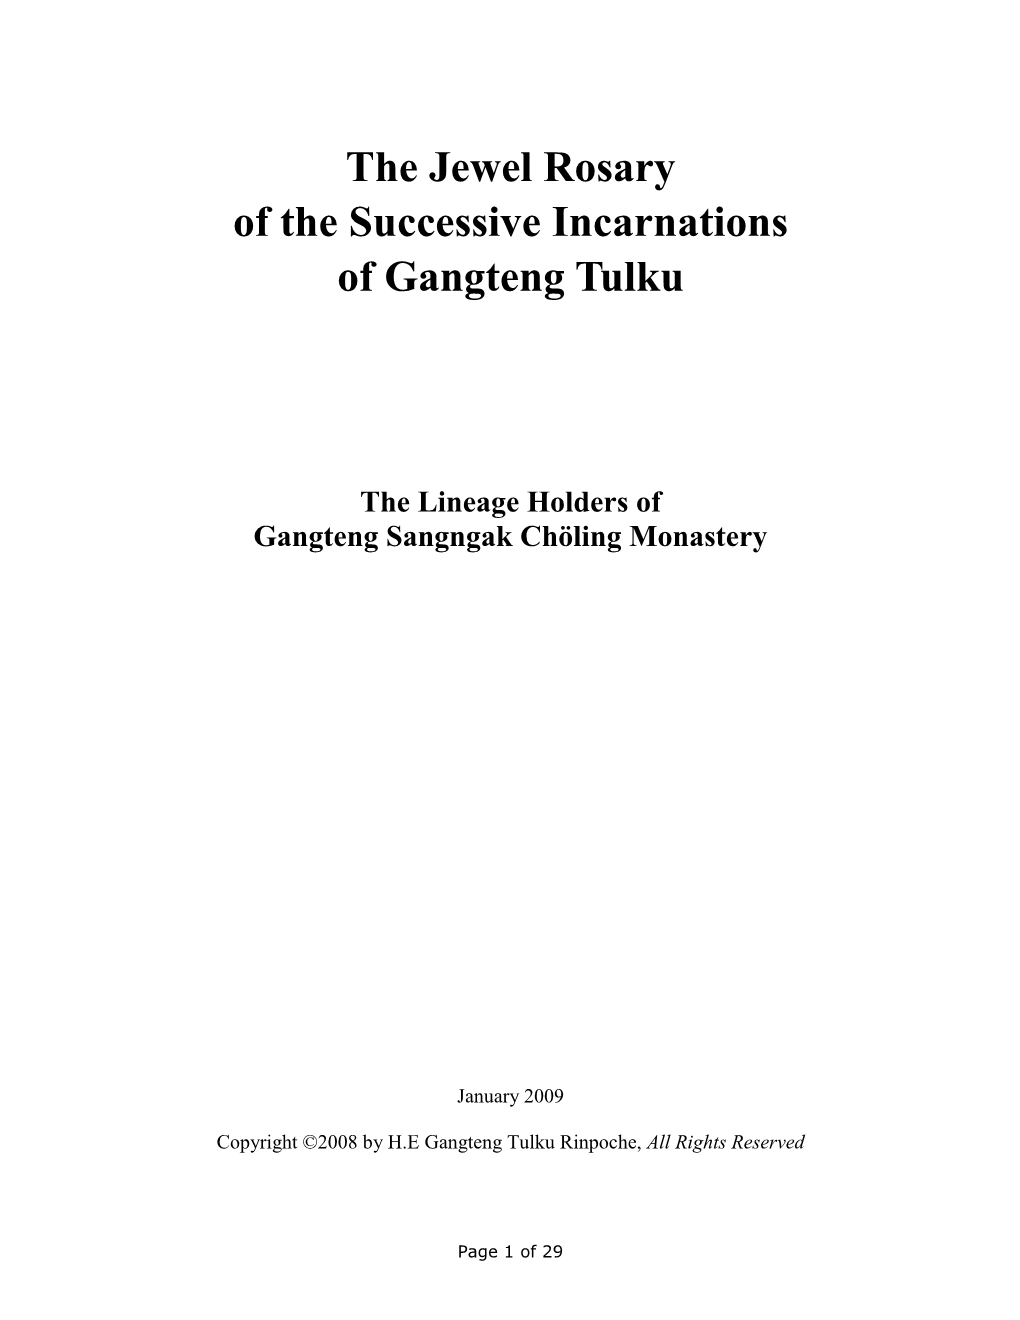 The Jewel Rosary of the Successive Incarnations of Gangteng Tulku